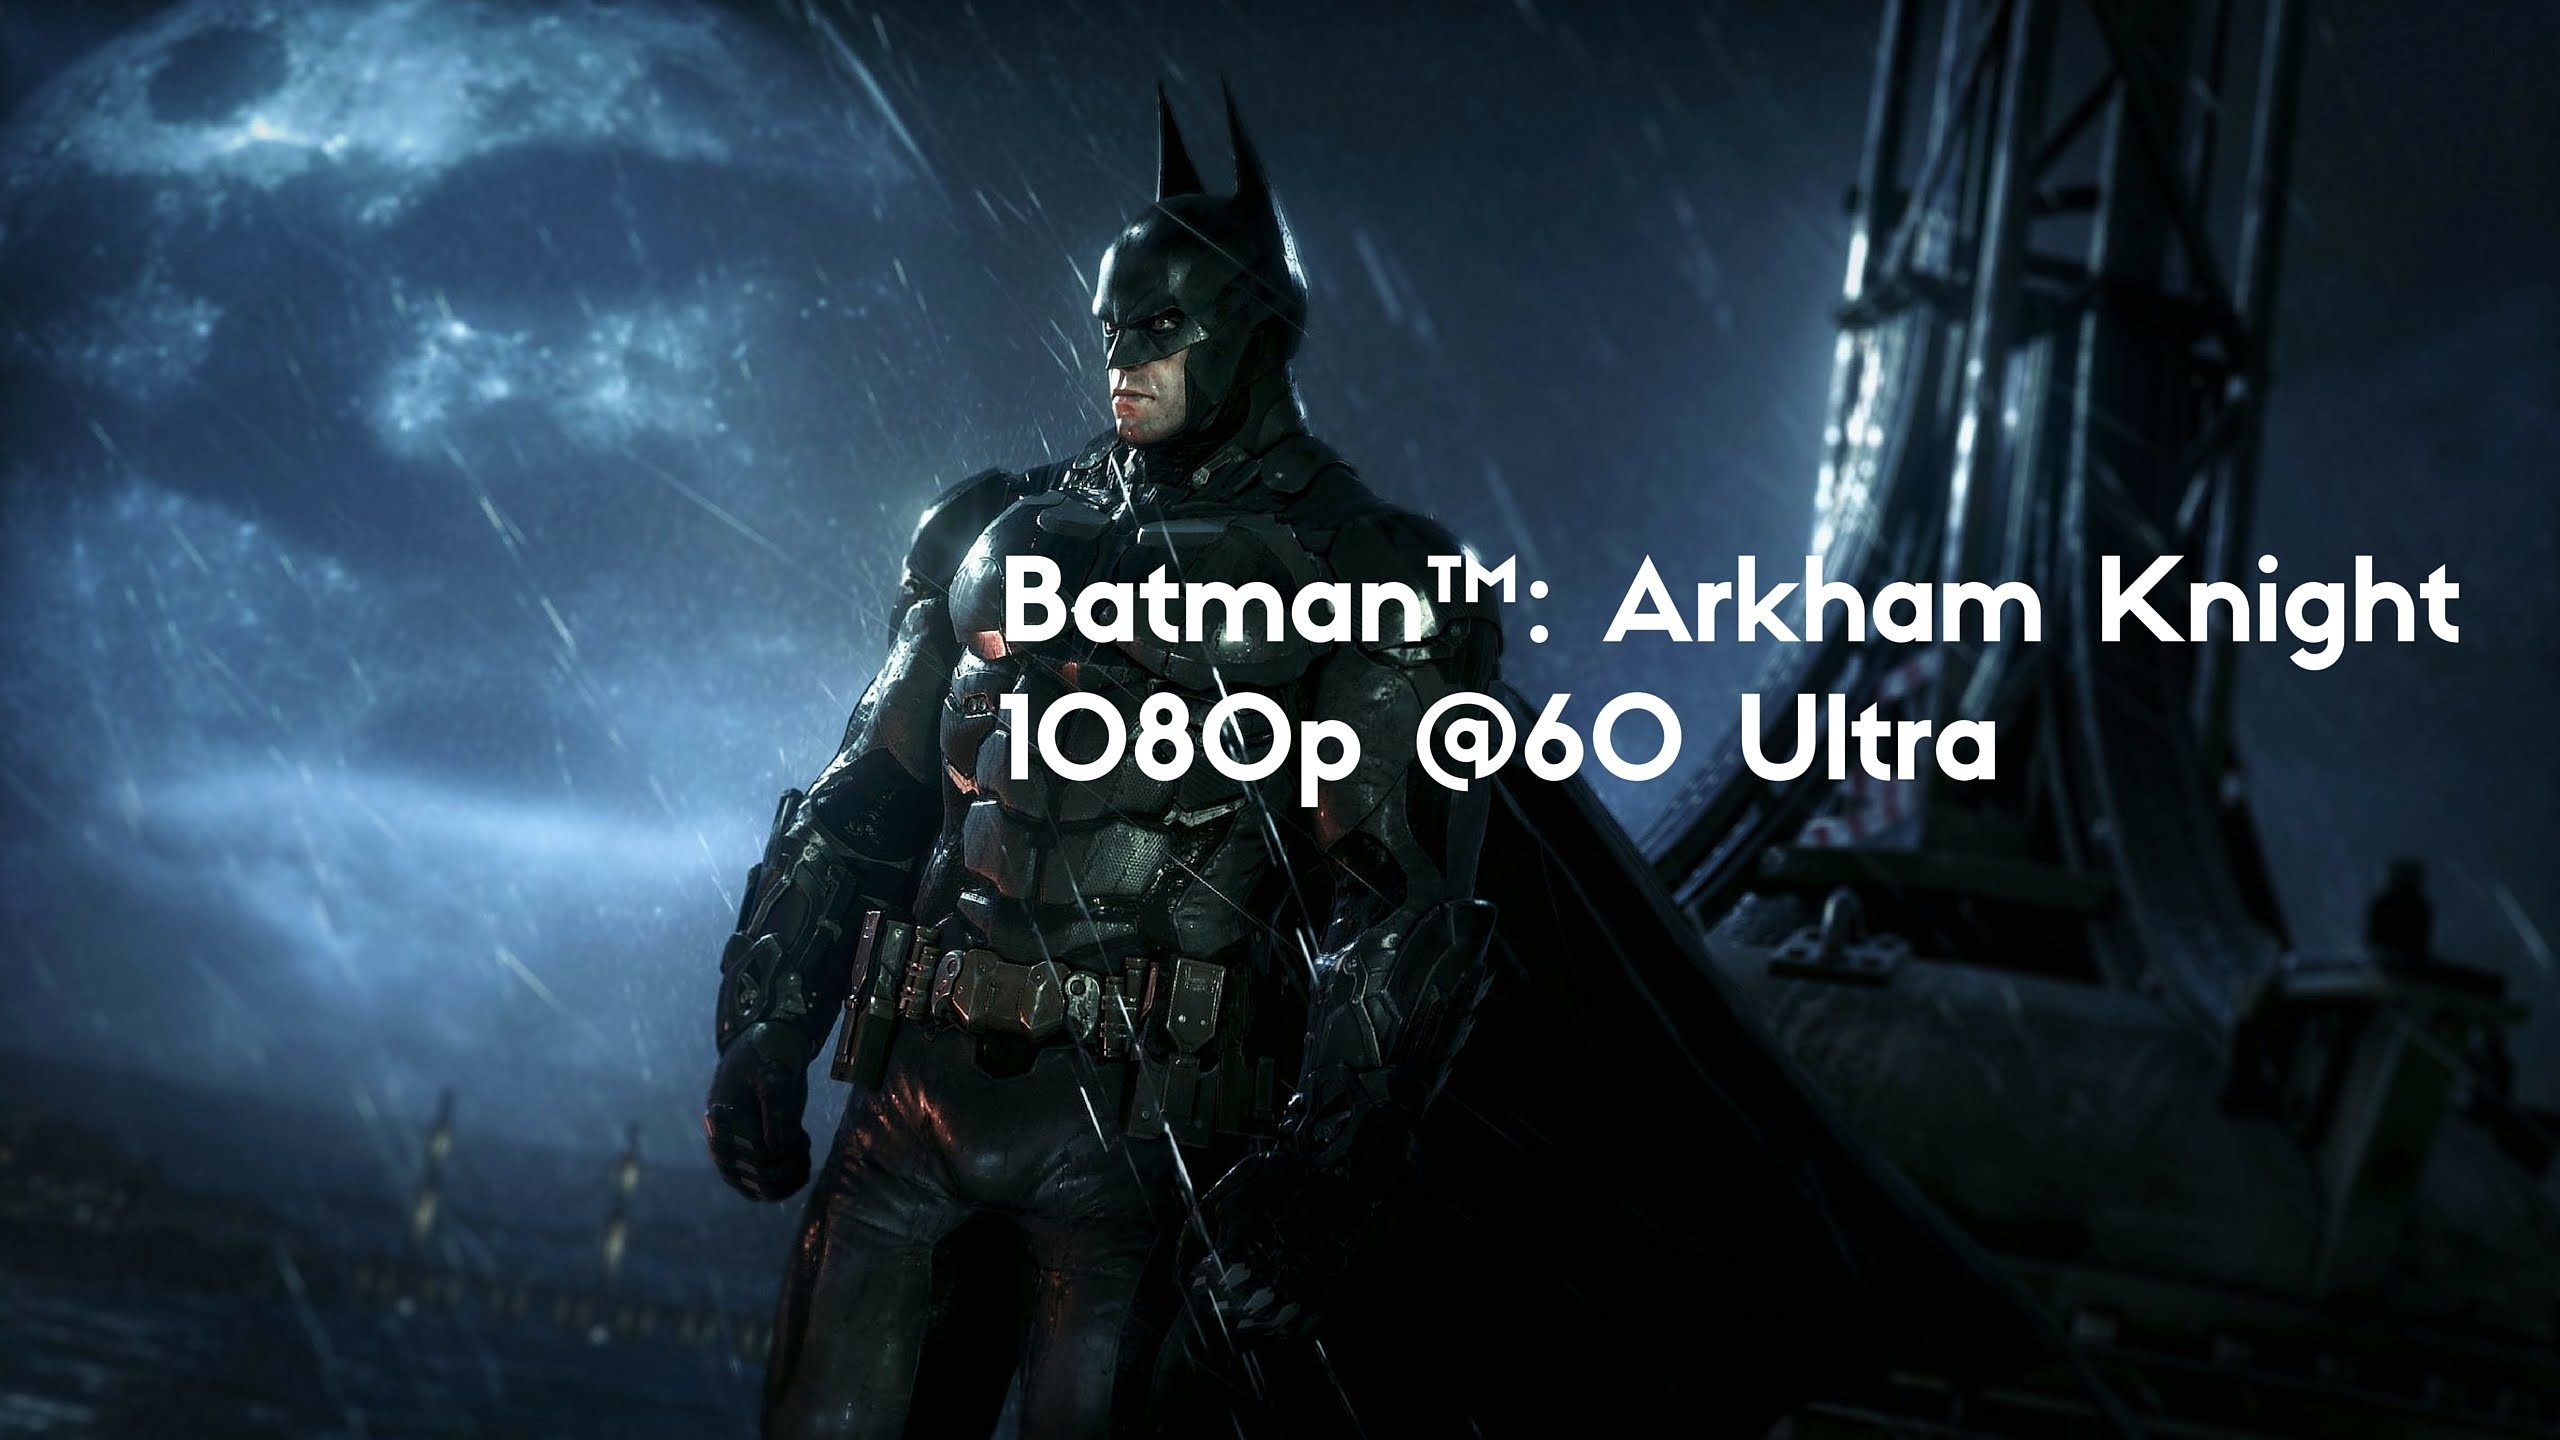 2560x1440 Batman: Arkham Knight Ultra # Intel i5 6600 CPU # EVGA GeForce GTX 970 FWT  - YouTube